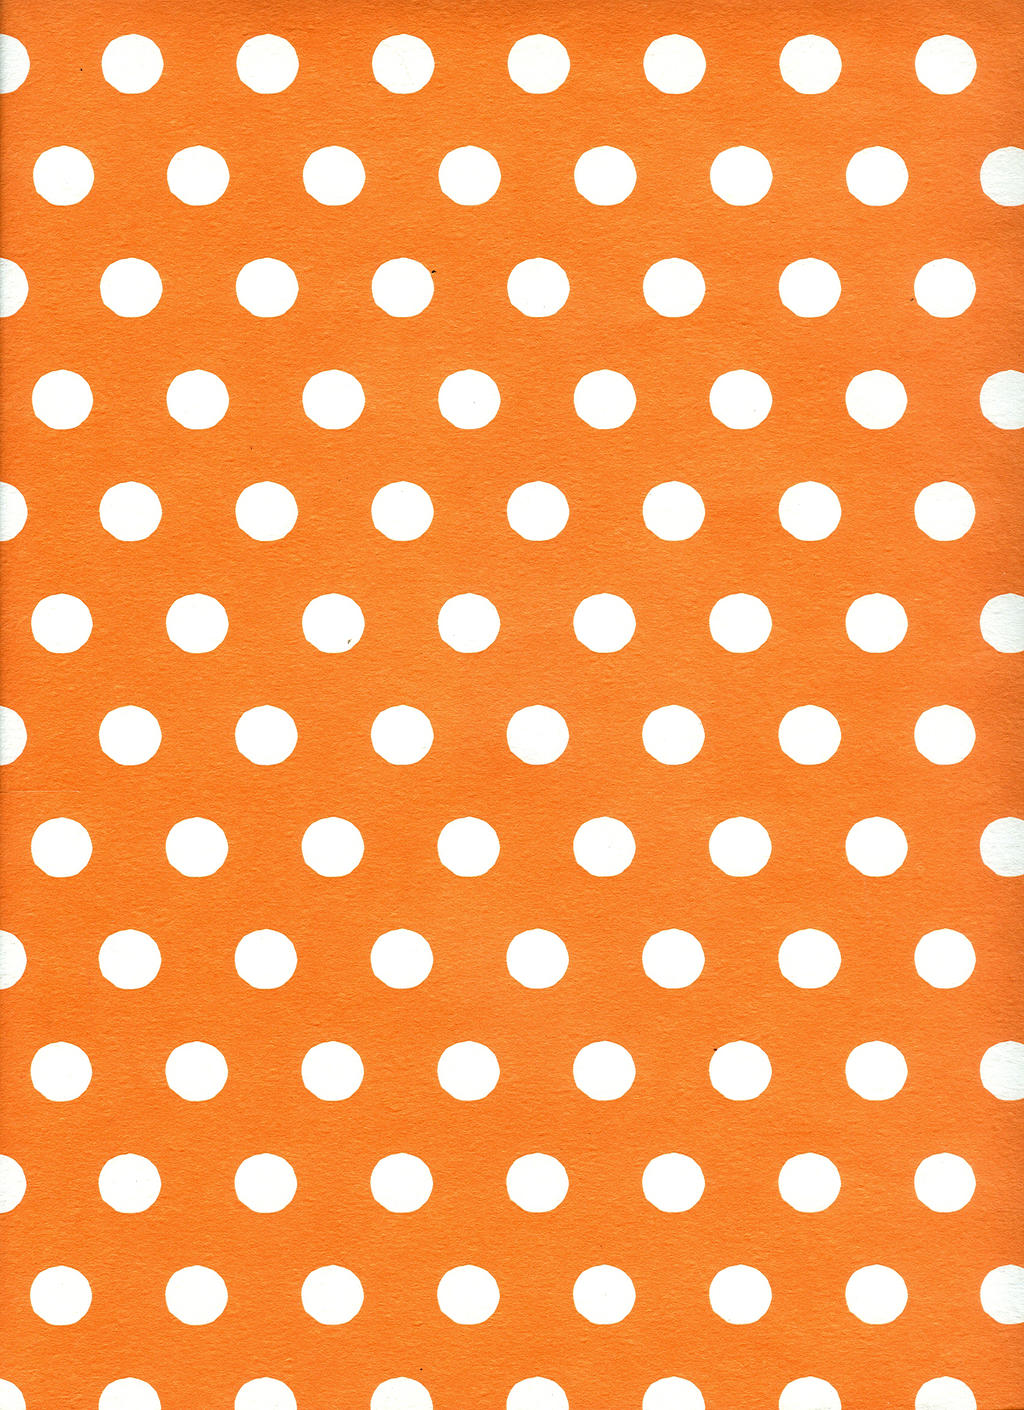 Orange paper texture with white dots by mercurycode on DeviantArt